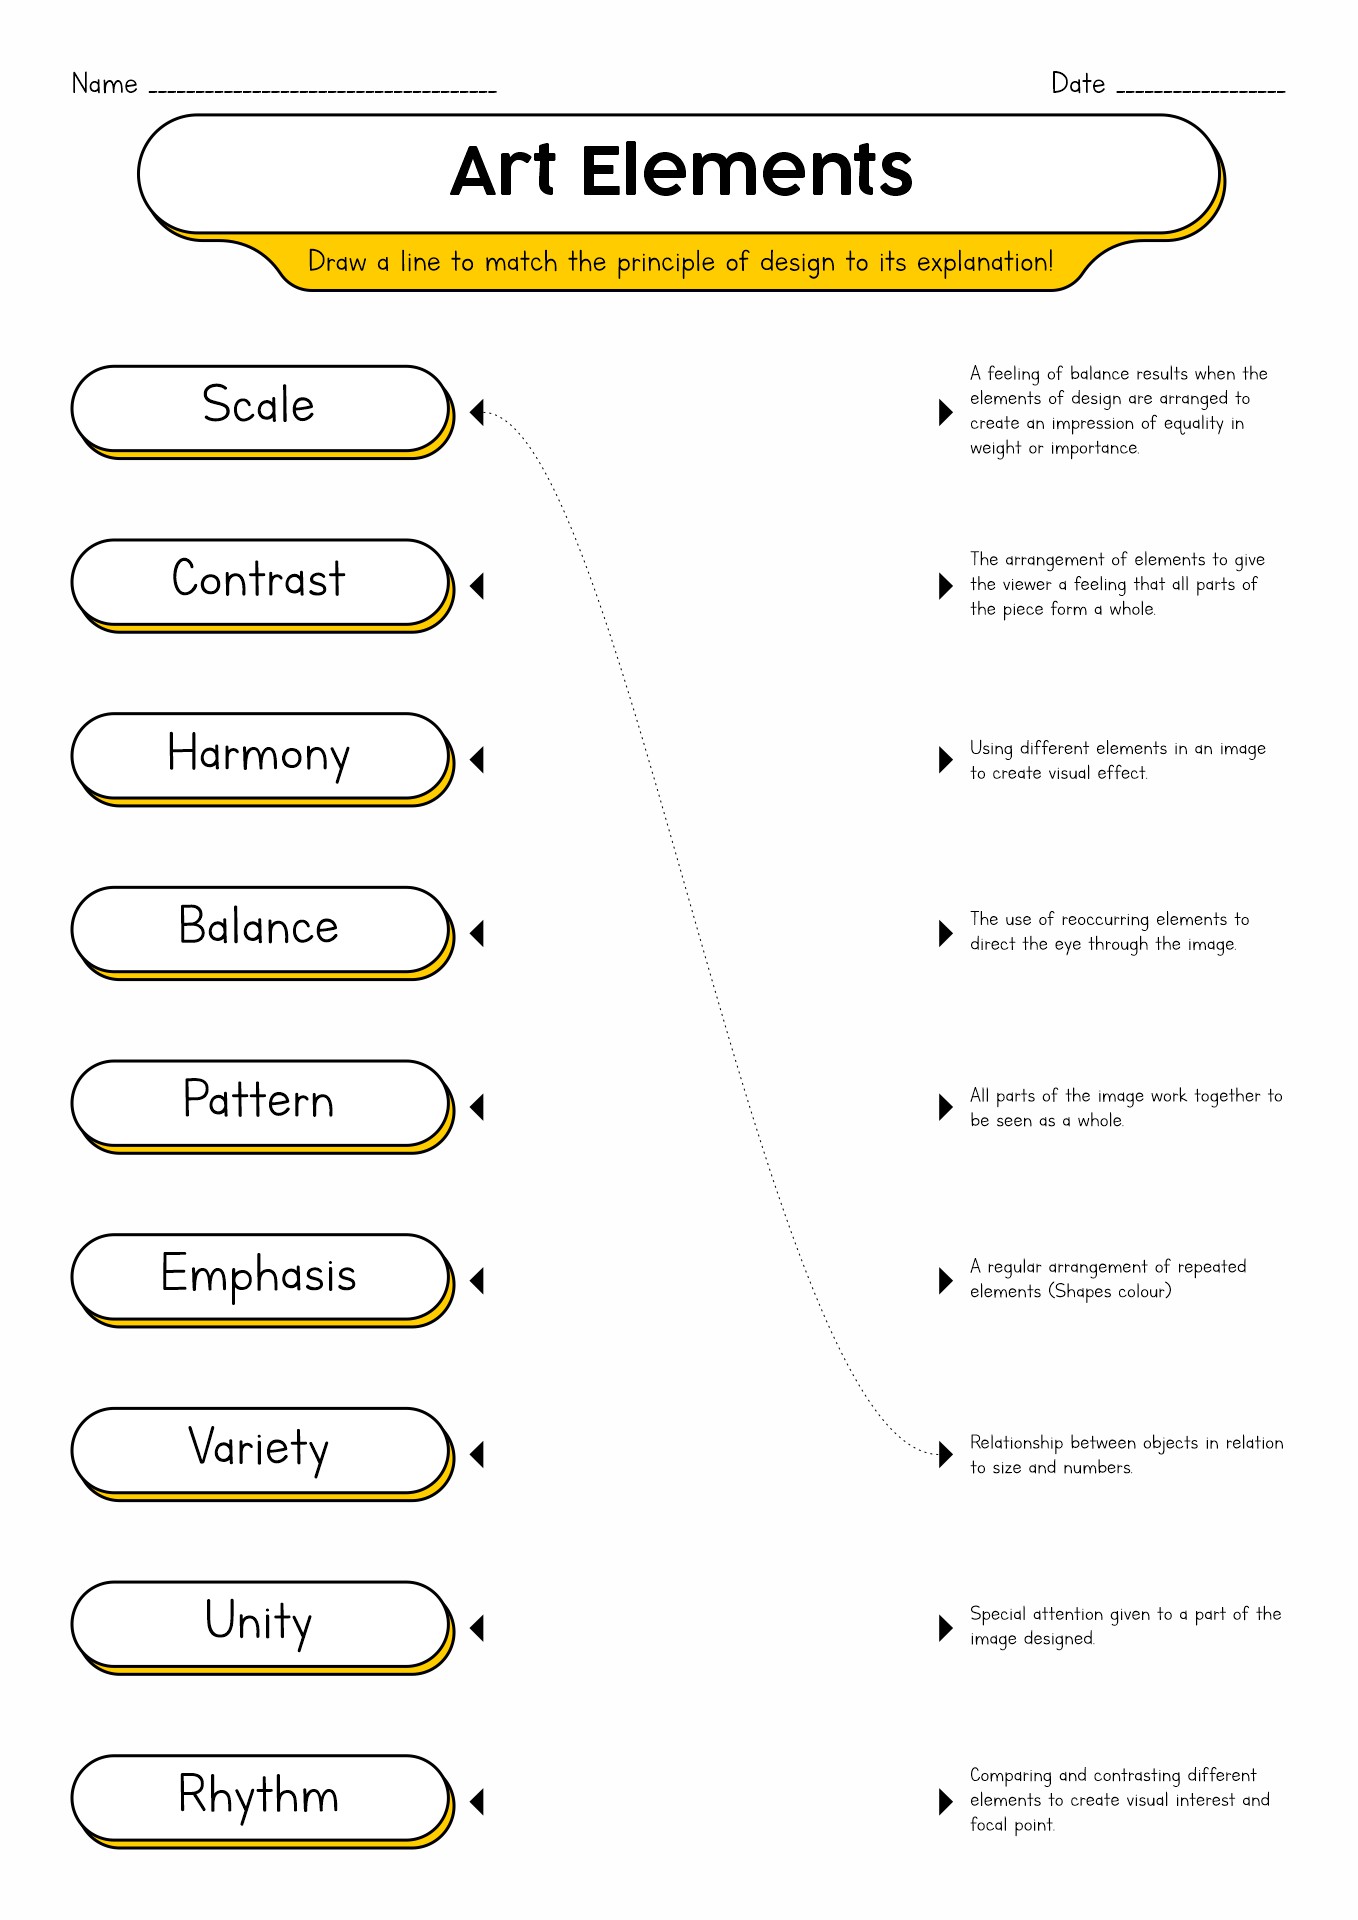 Art Elements and Principles Worksheet Image